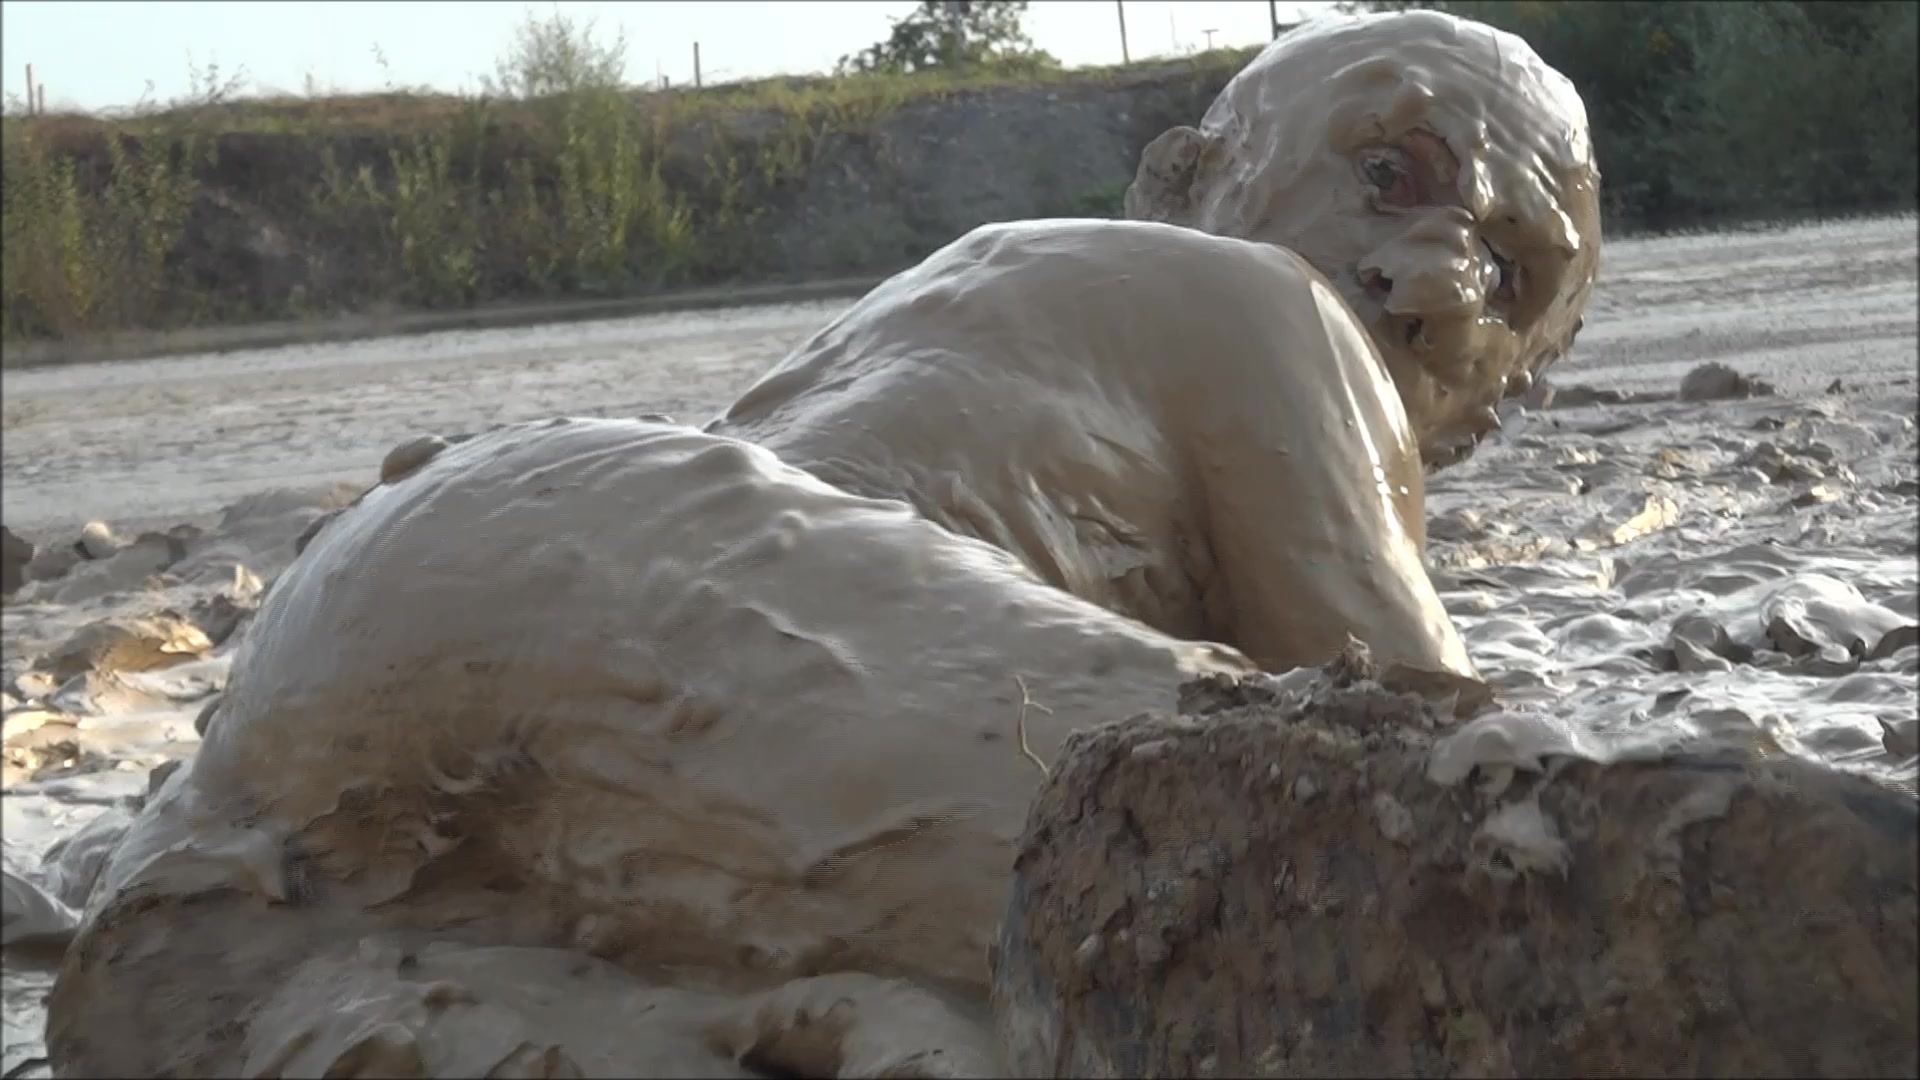 Fat Girl Naked Mud - Naked mud bath 2 - ThisVid.com